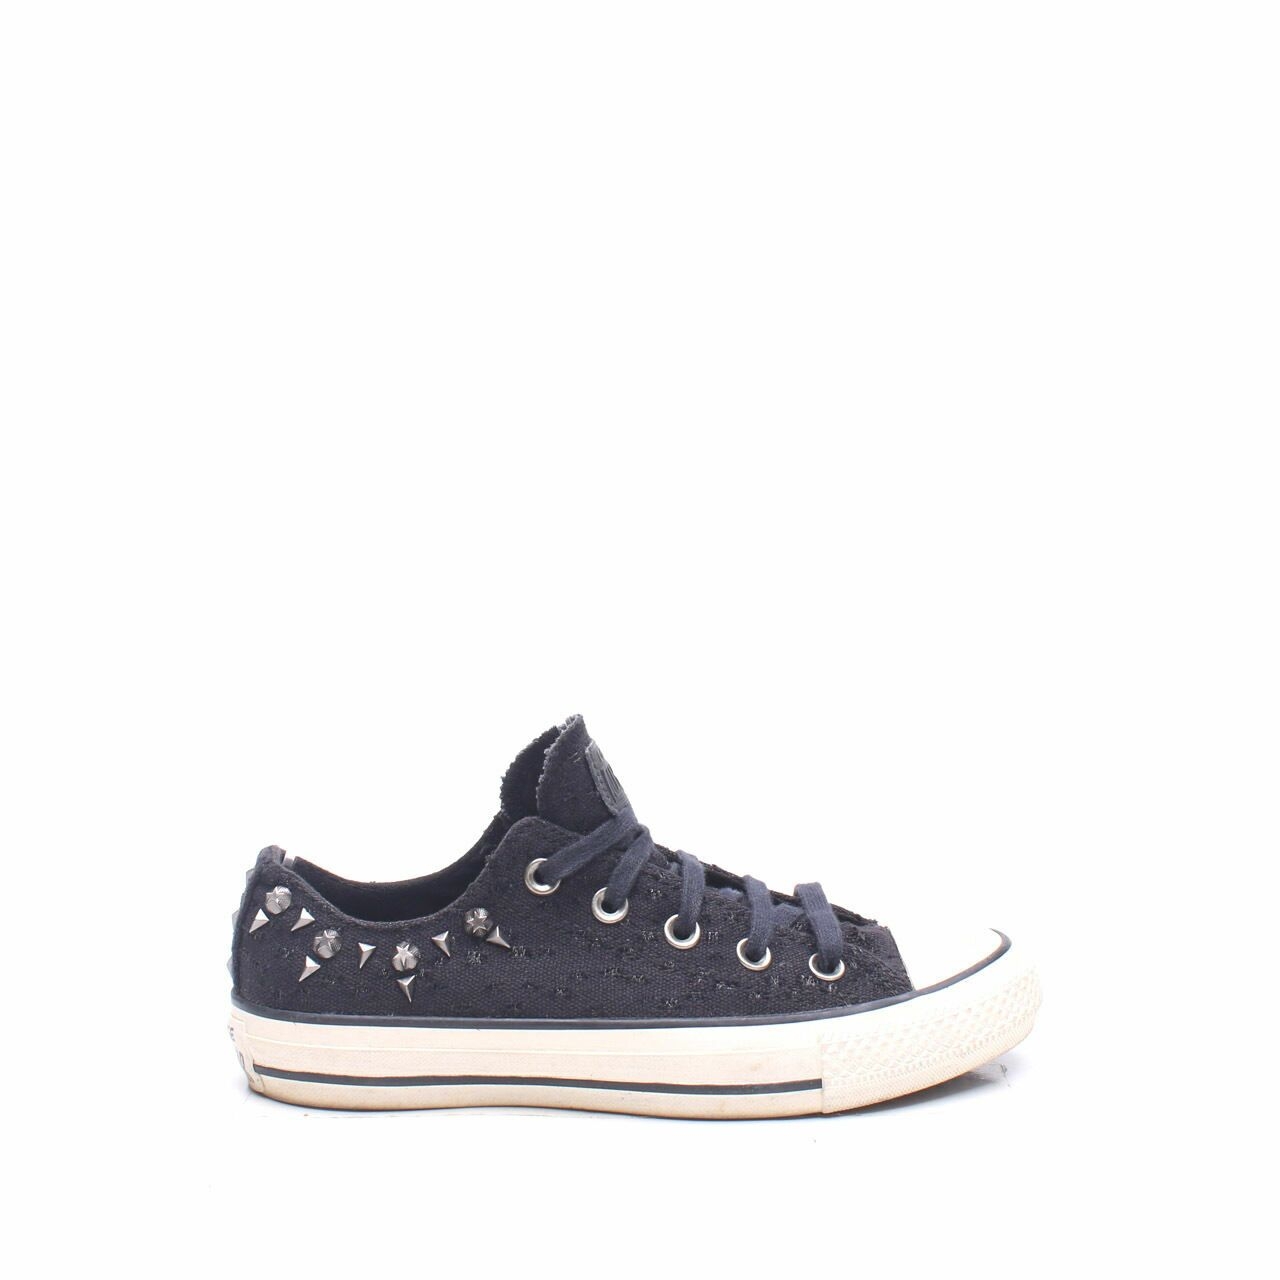 Converse Ct Ox Black/Egret Sneakers